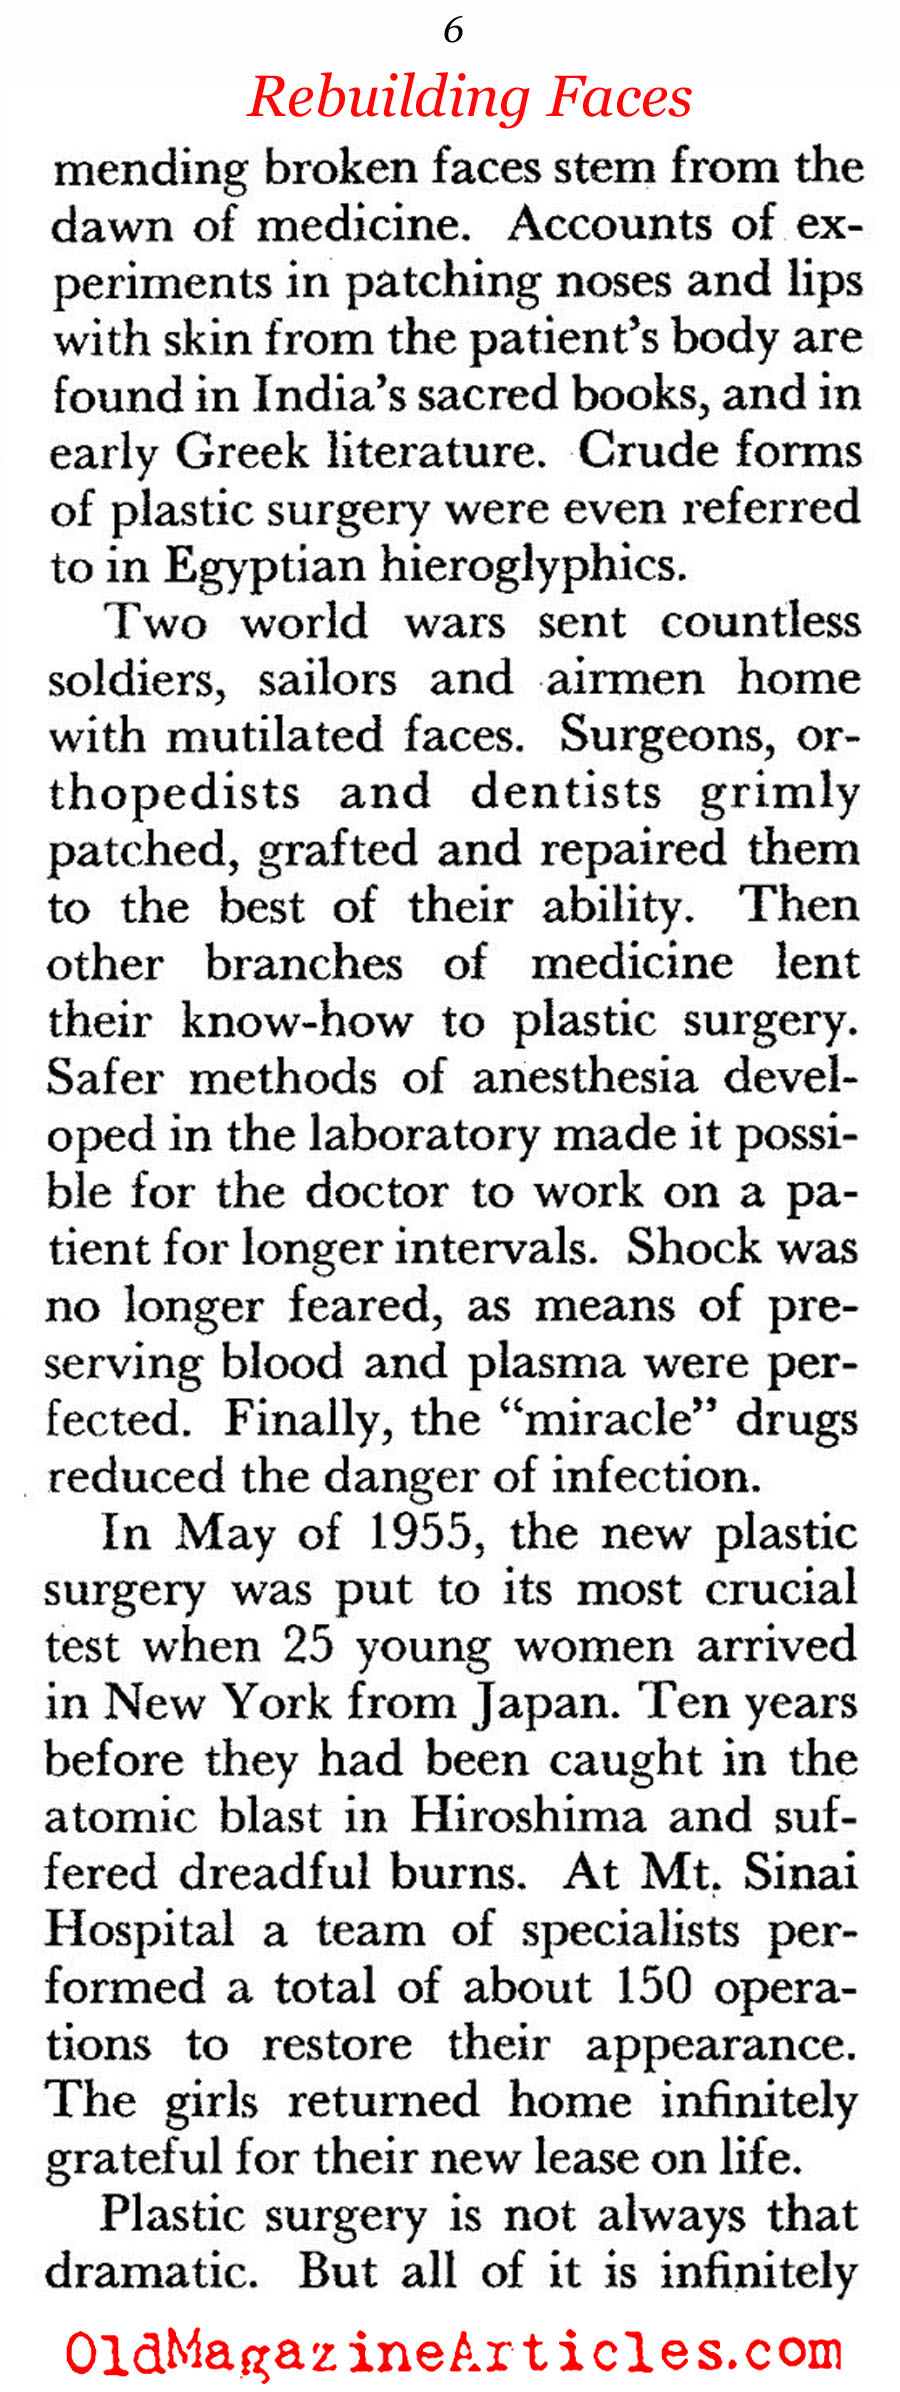 The Institute for Reconstructive Plastic Surgery<BR> (Coronet Magazine, 1959)